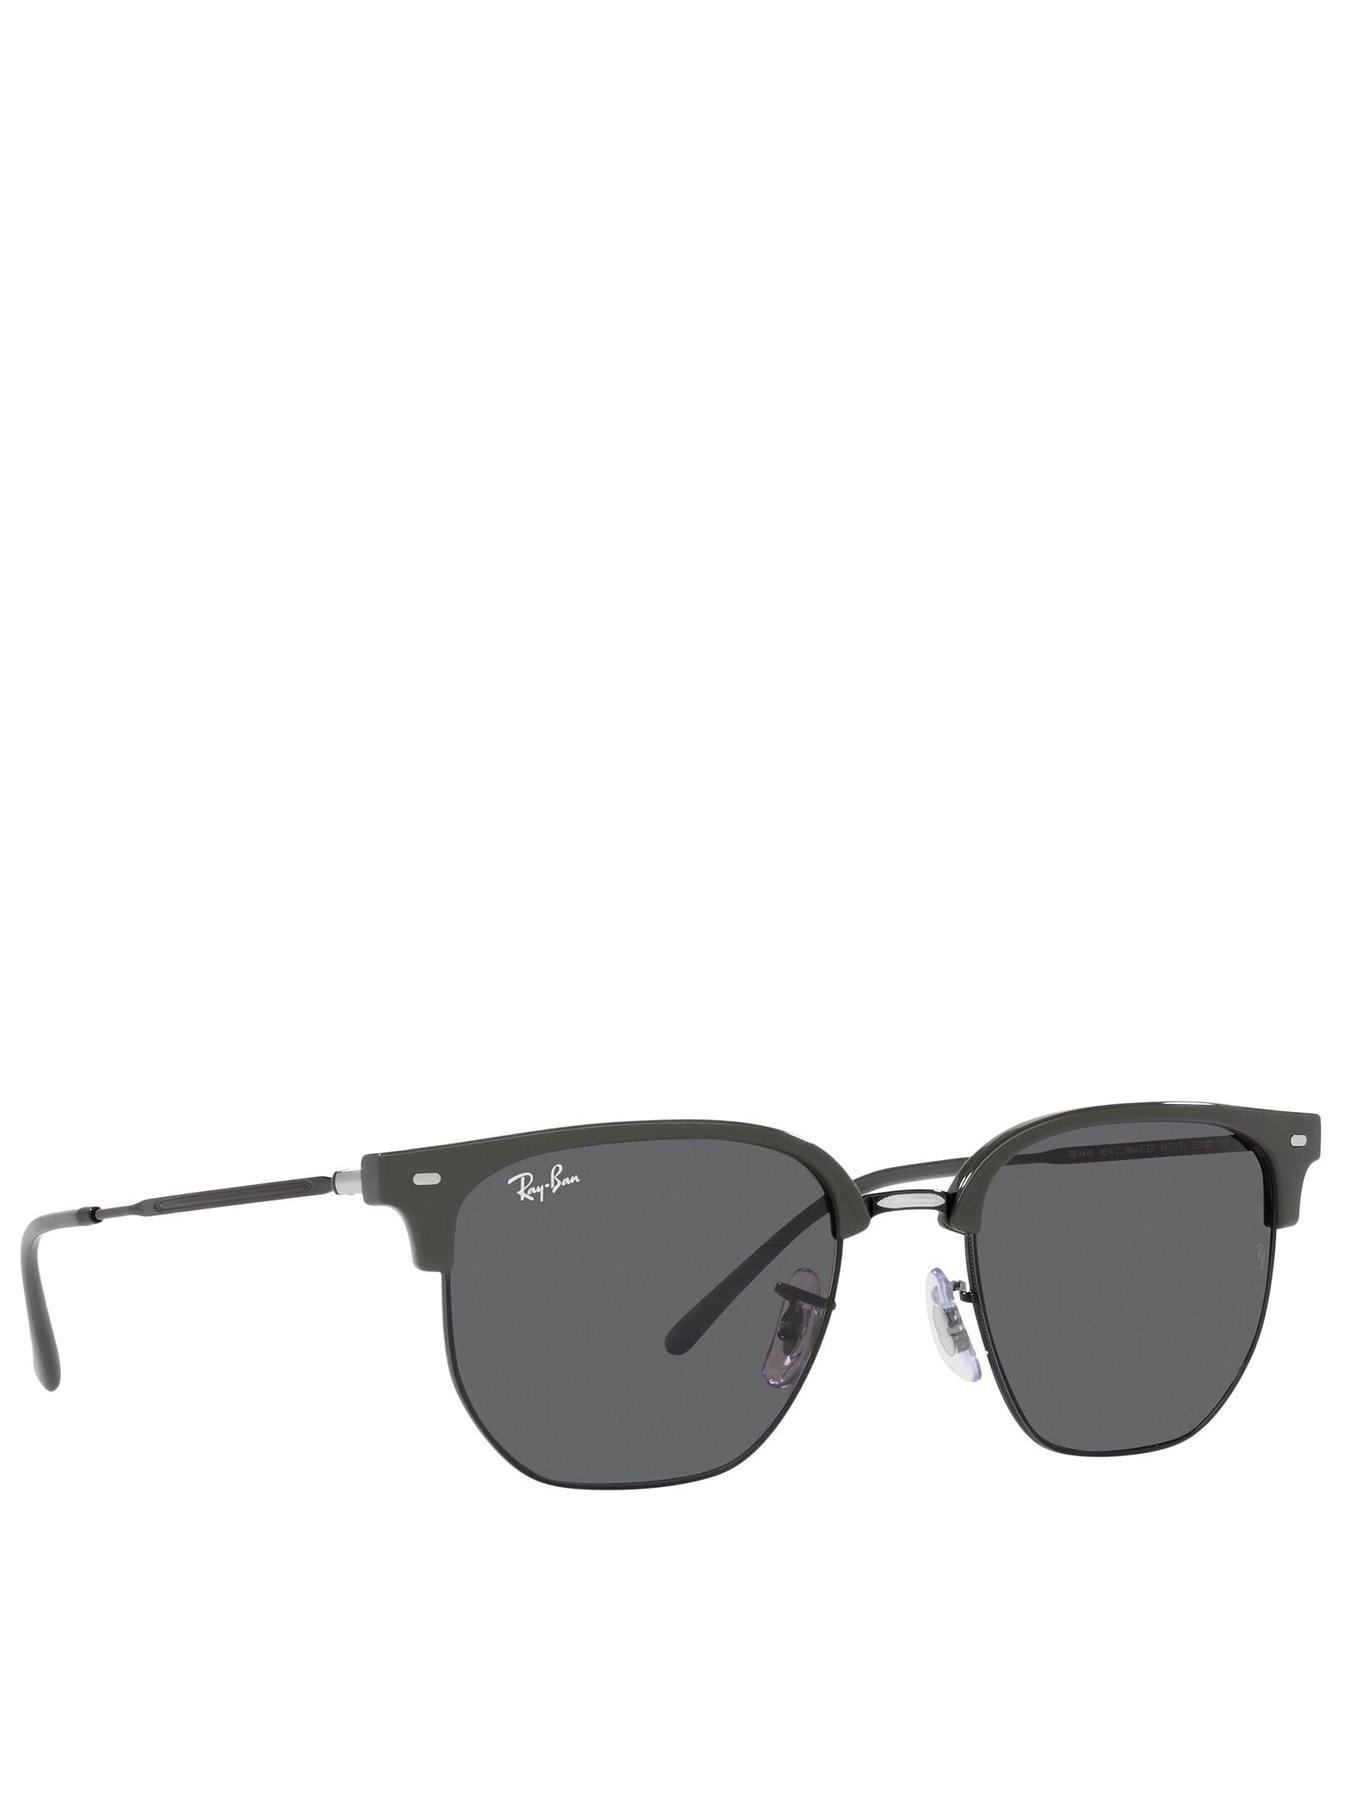 Ray-Ban Rectangle Sunglasses - Grey